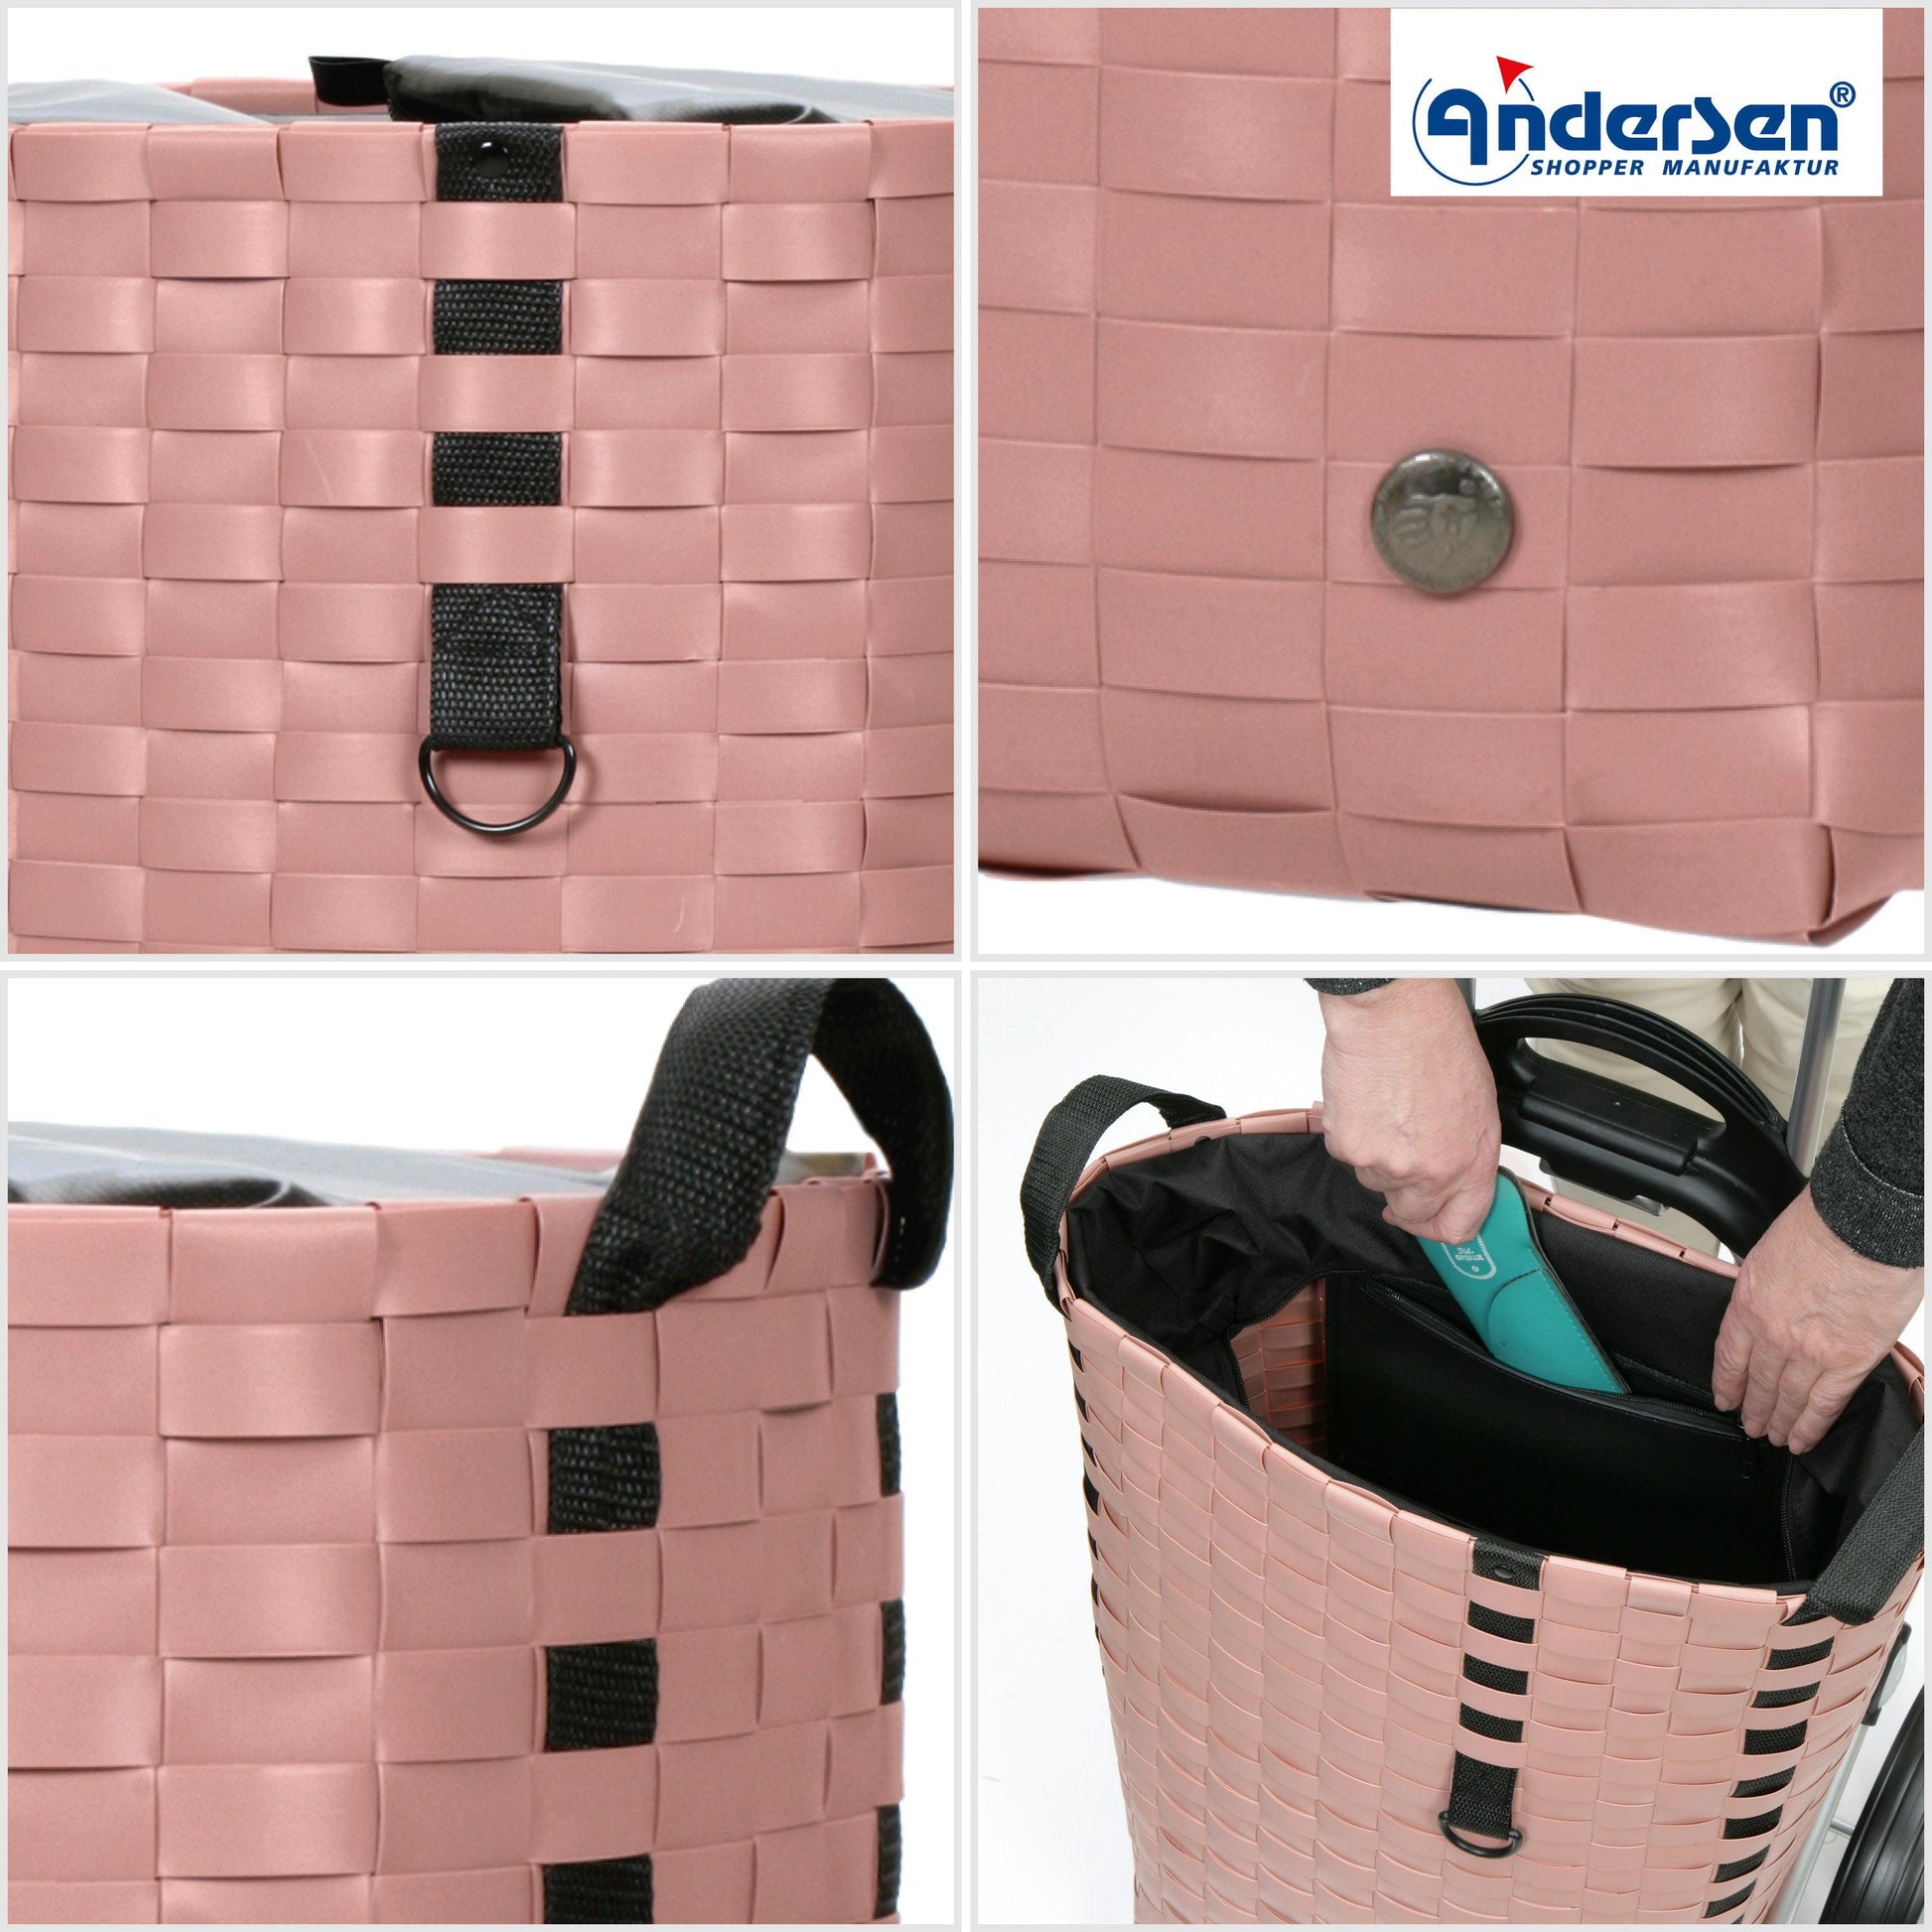 Andersen Shopper Manufaktur-Unus Shopper Silja terra pink-www.shopping-trolley.ch-bild6